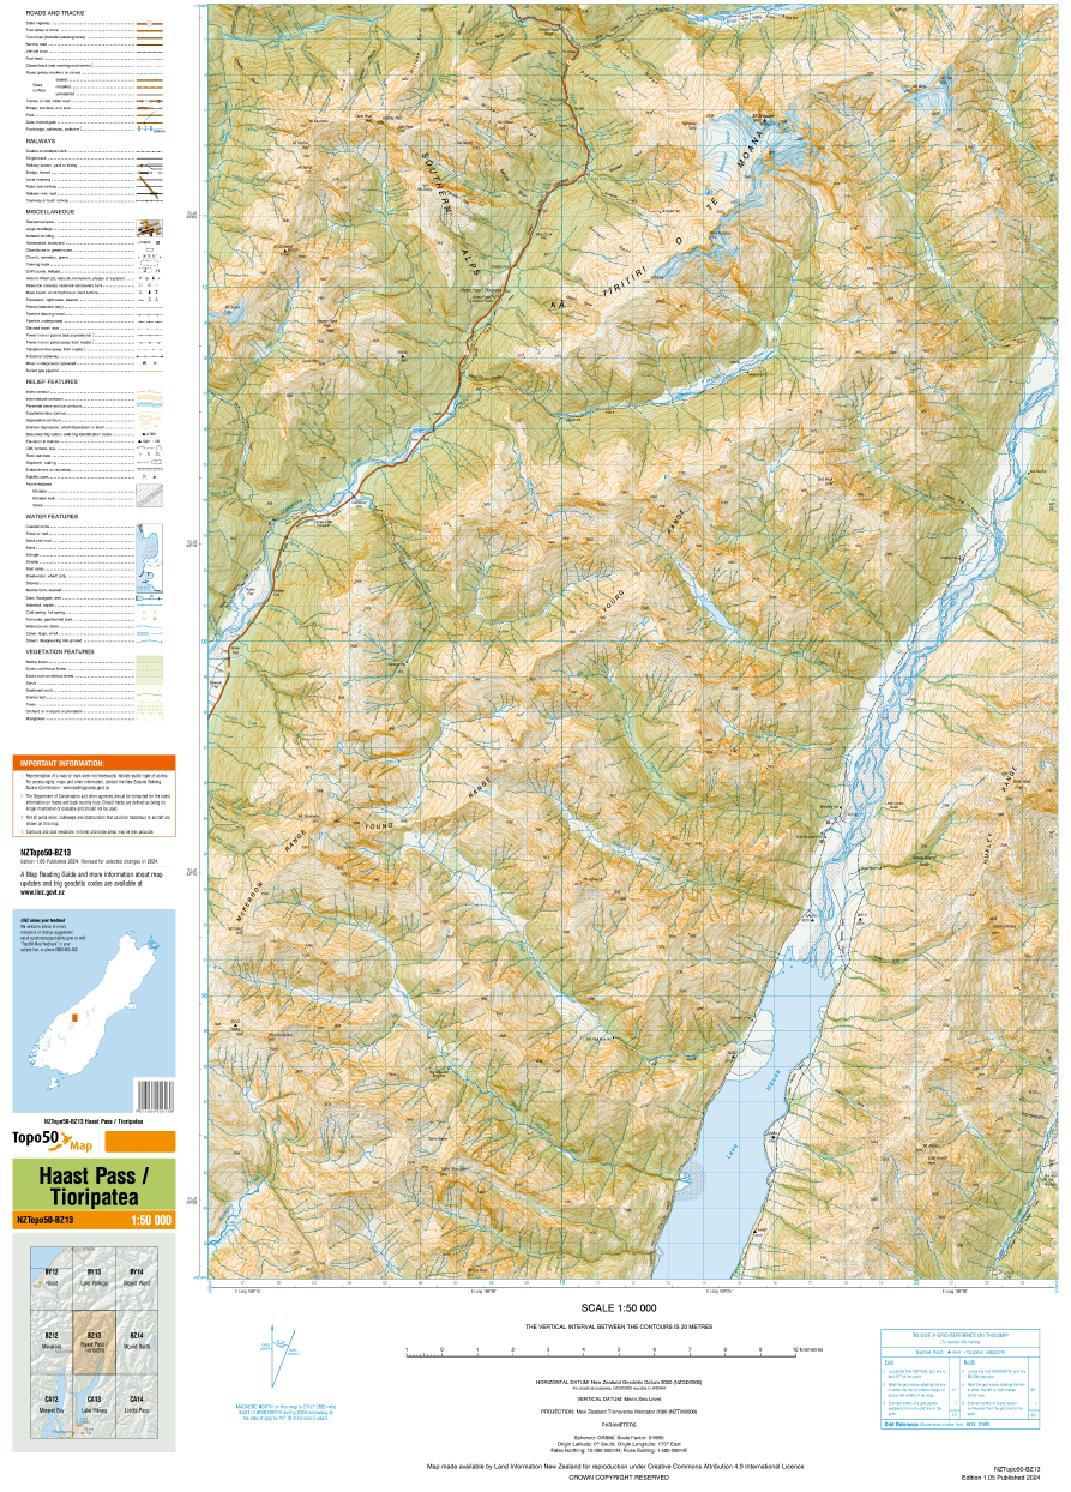 Topo map of Haast Pass / Tioripatea